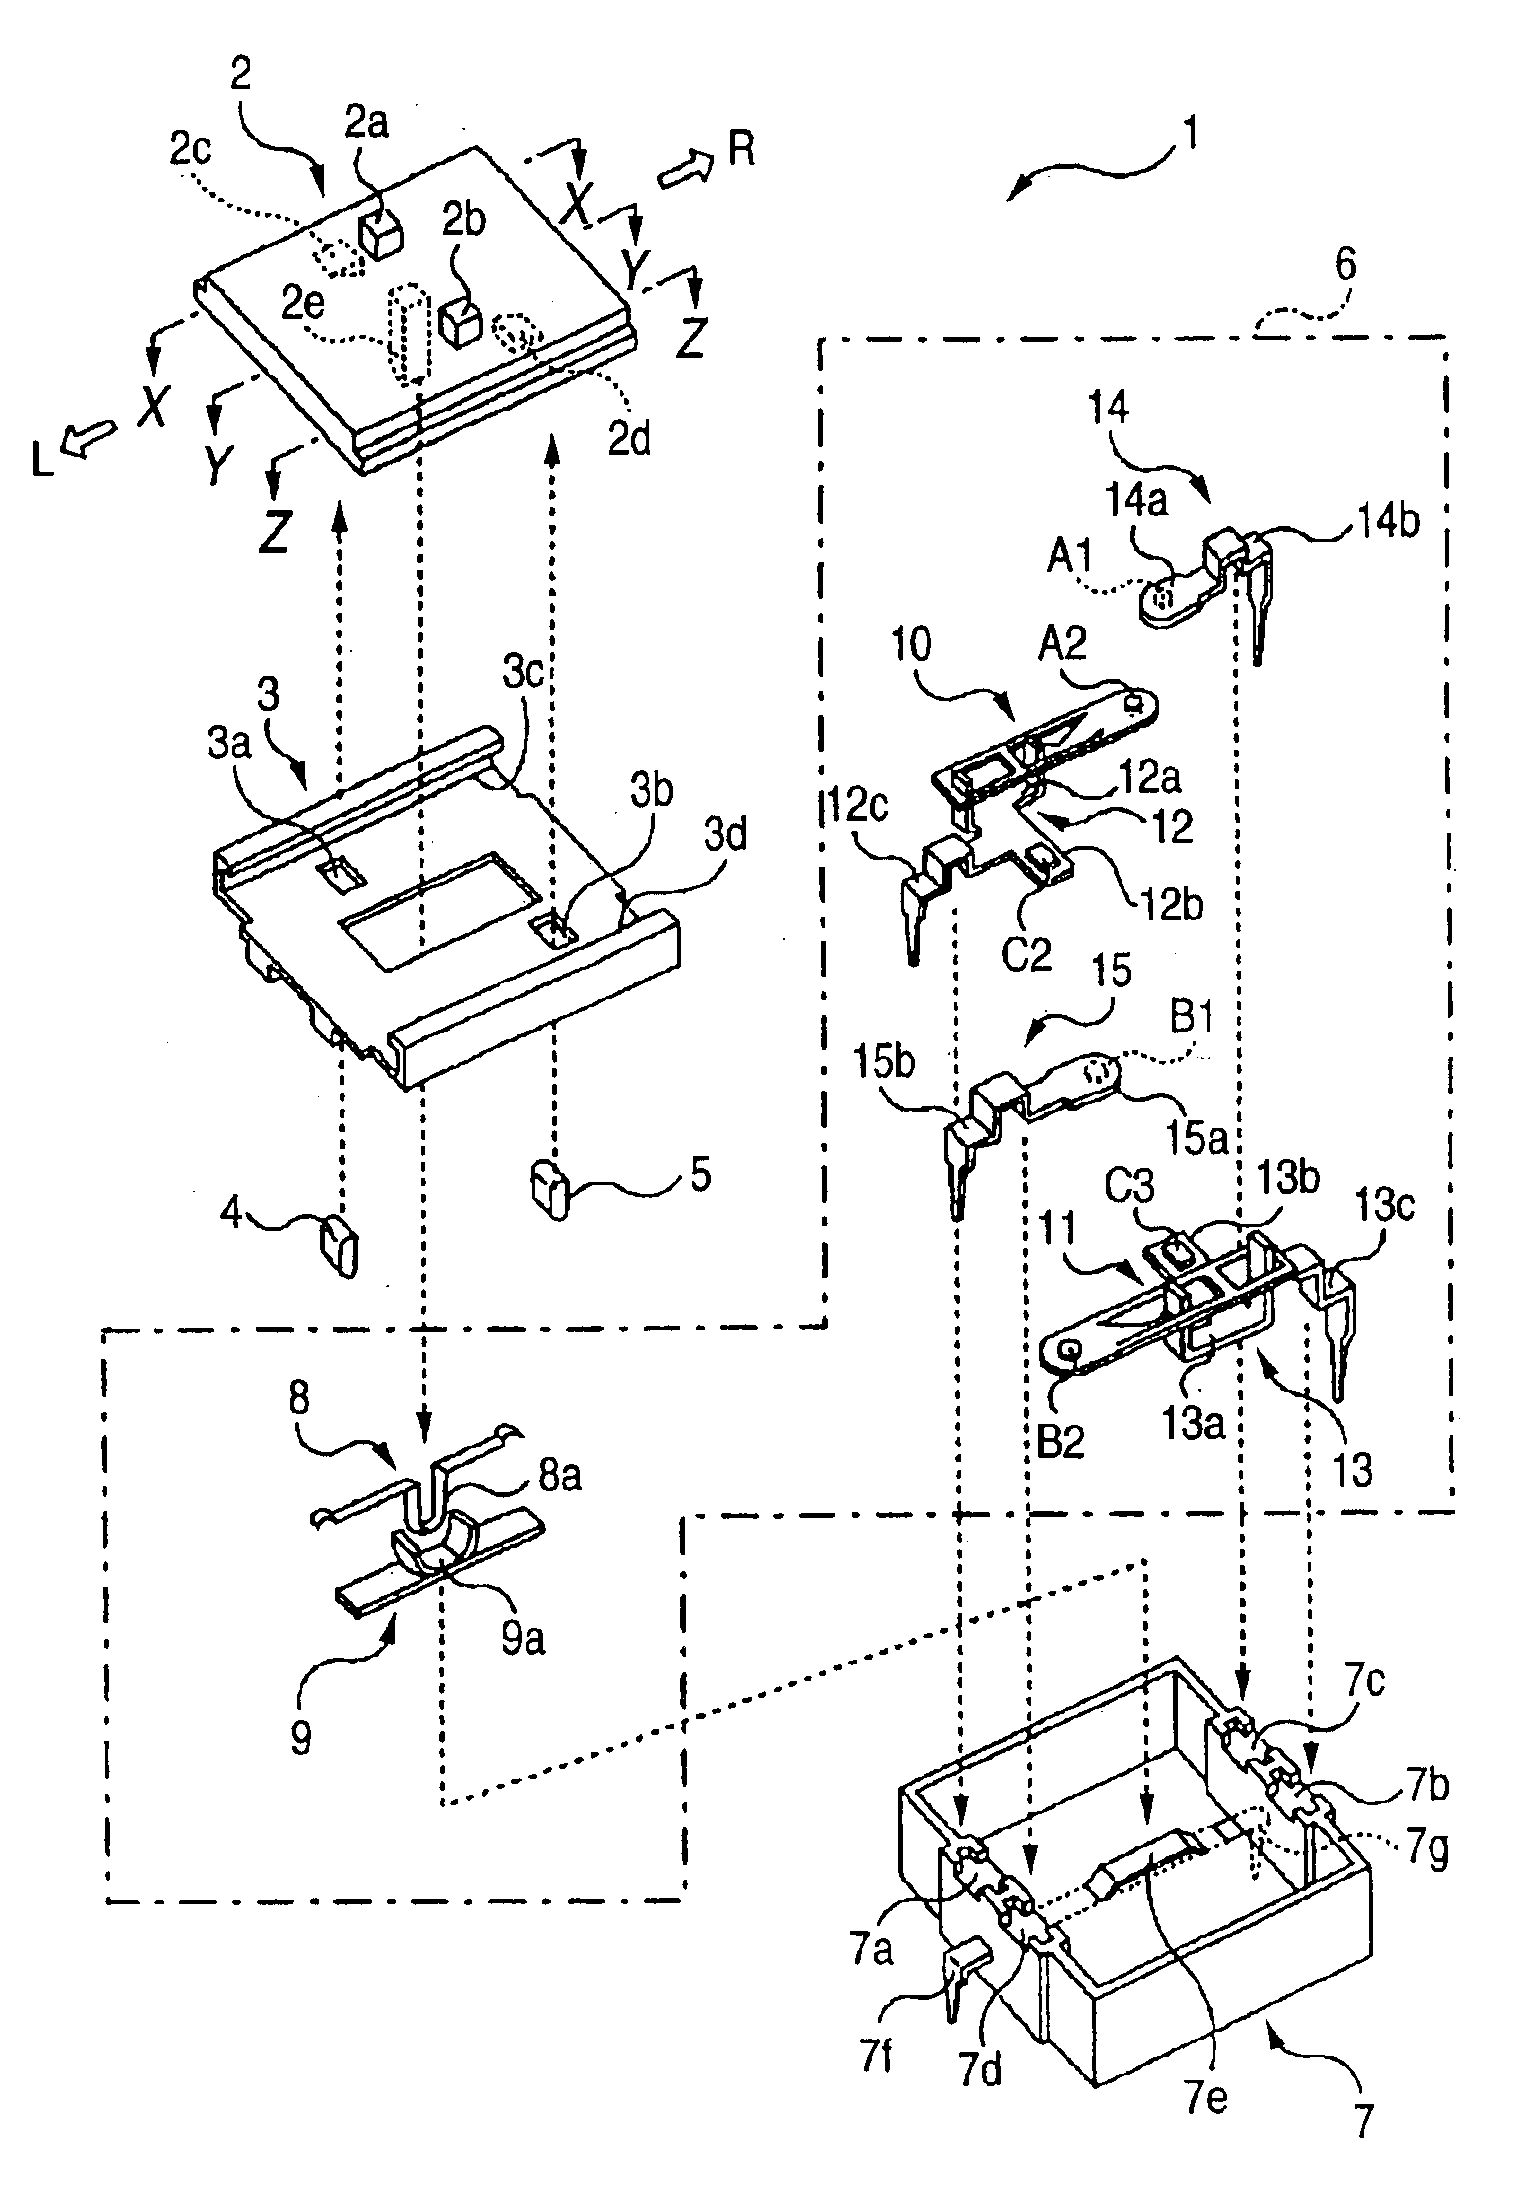 Switch apparatus